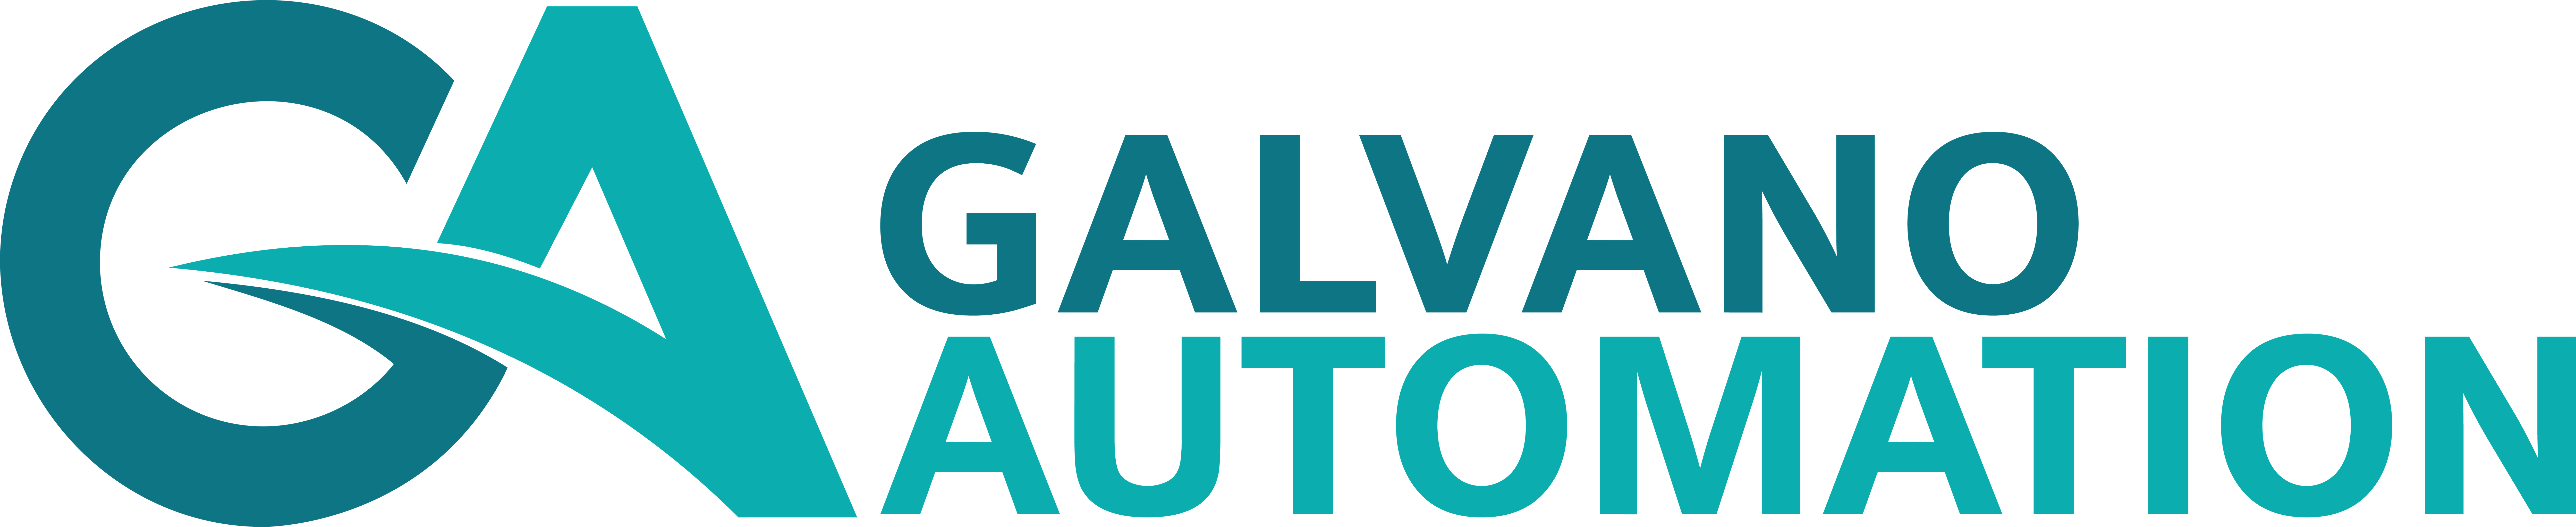 Galvano Automation